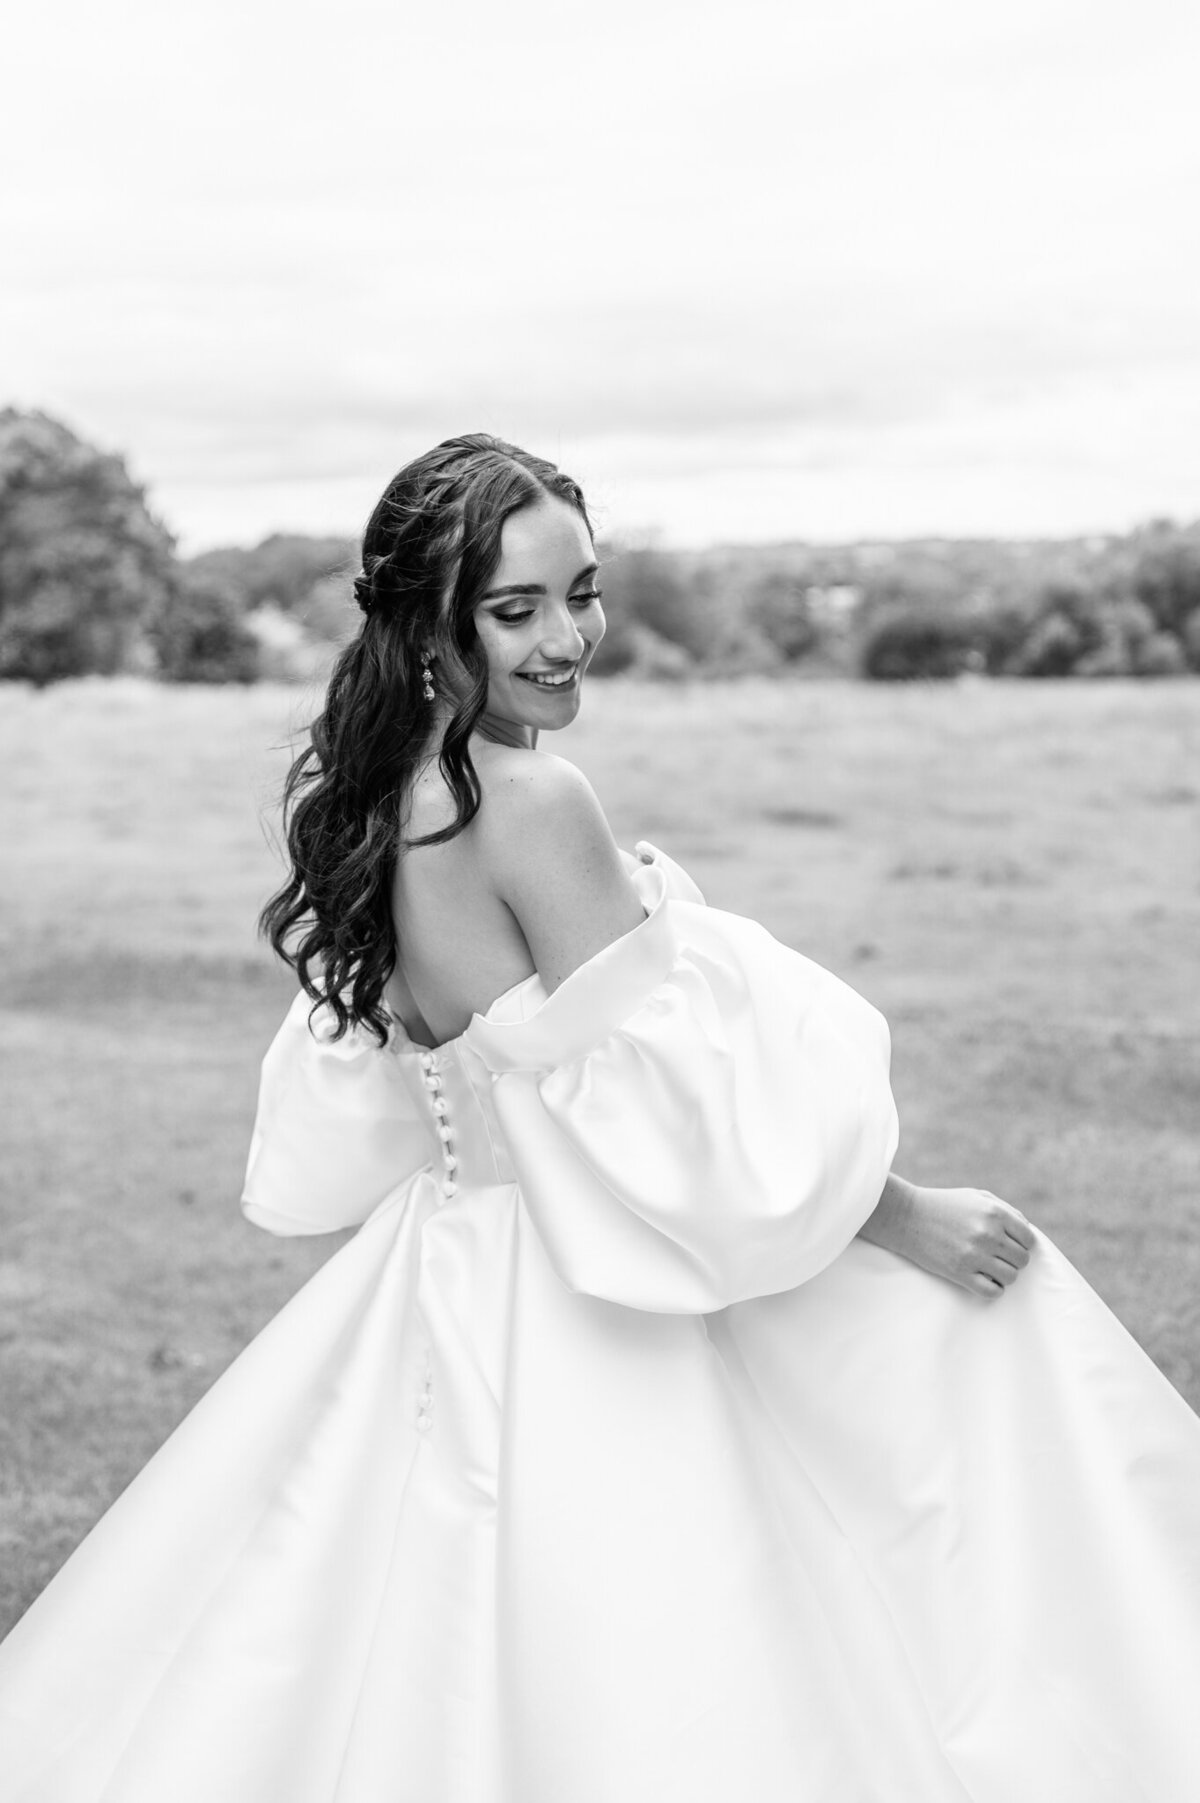 Chloe Bolam - UK Wedding and Engagment Photographer - Swanbourne House Wedding Venue Milton Keynes - Destination Wedding in the UK - 10